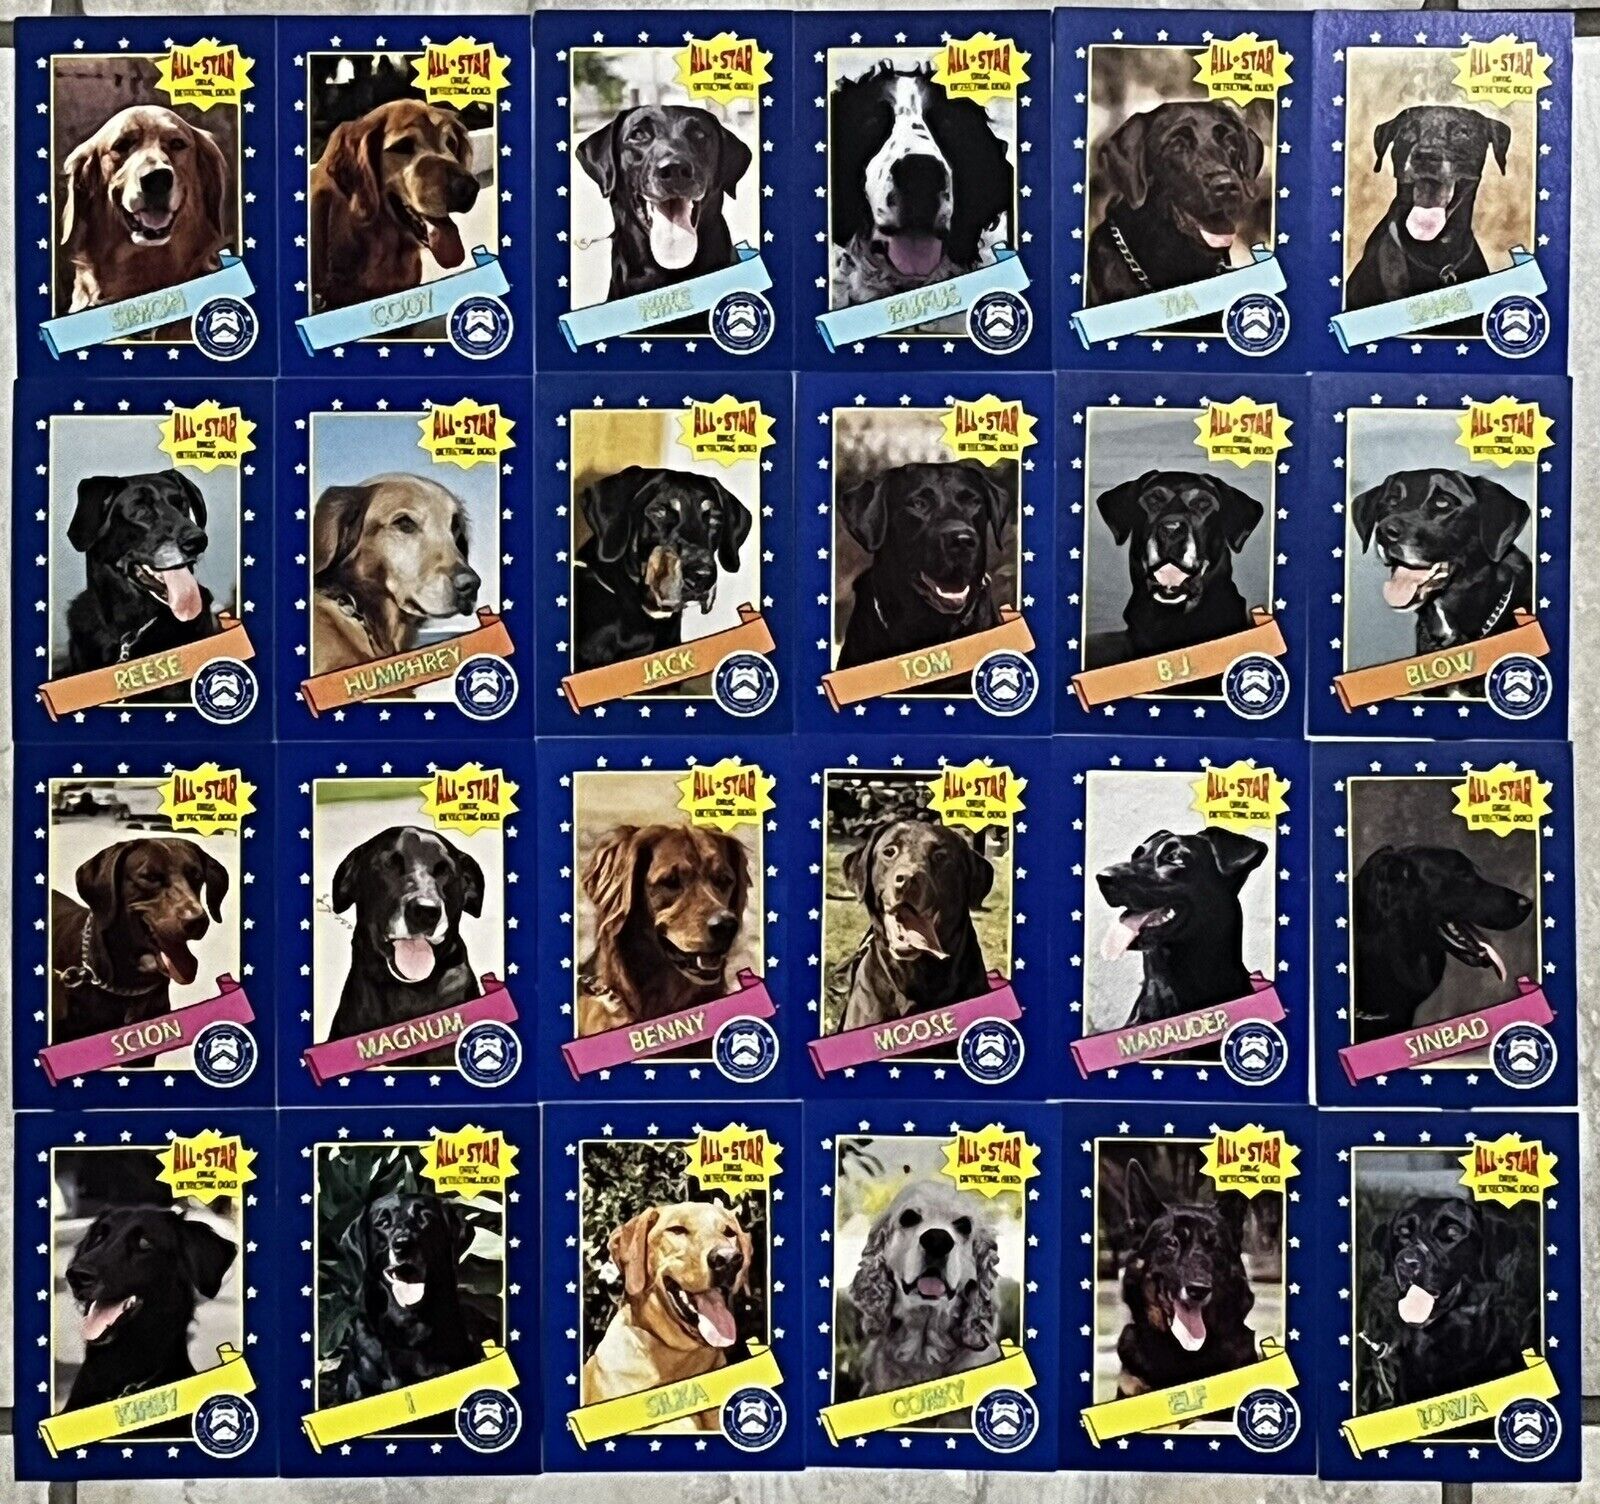 1992 Milk-Bone All Star Drug Detecting Dogs Complete Card Set (1-24)